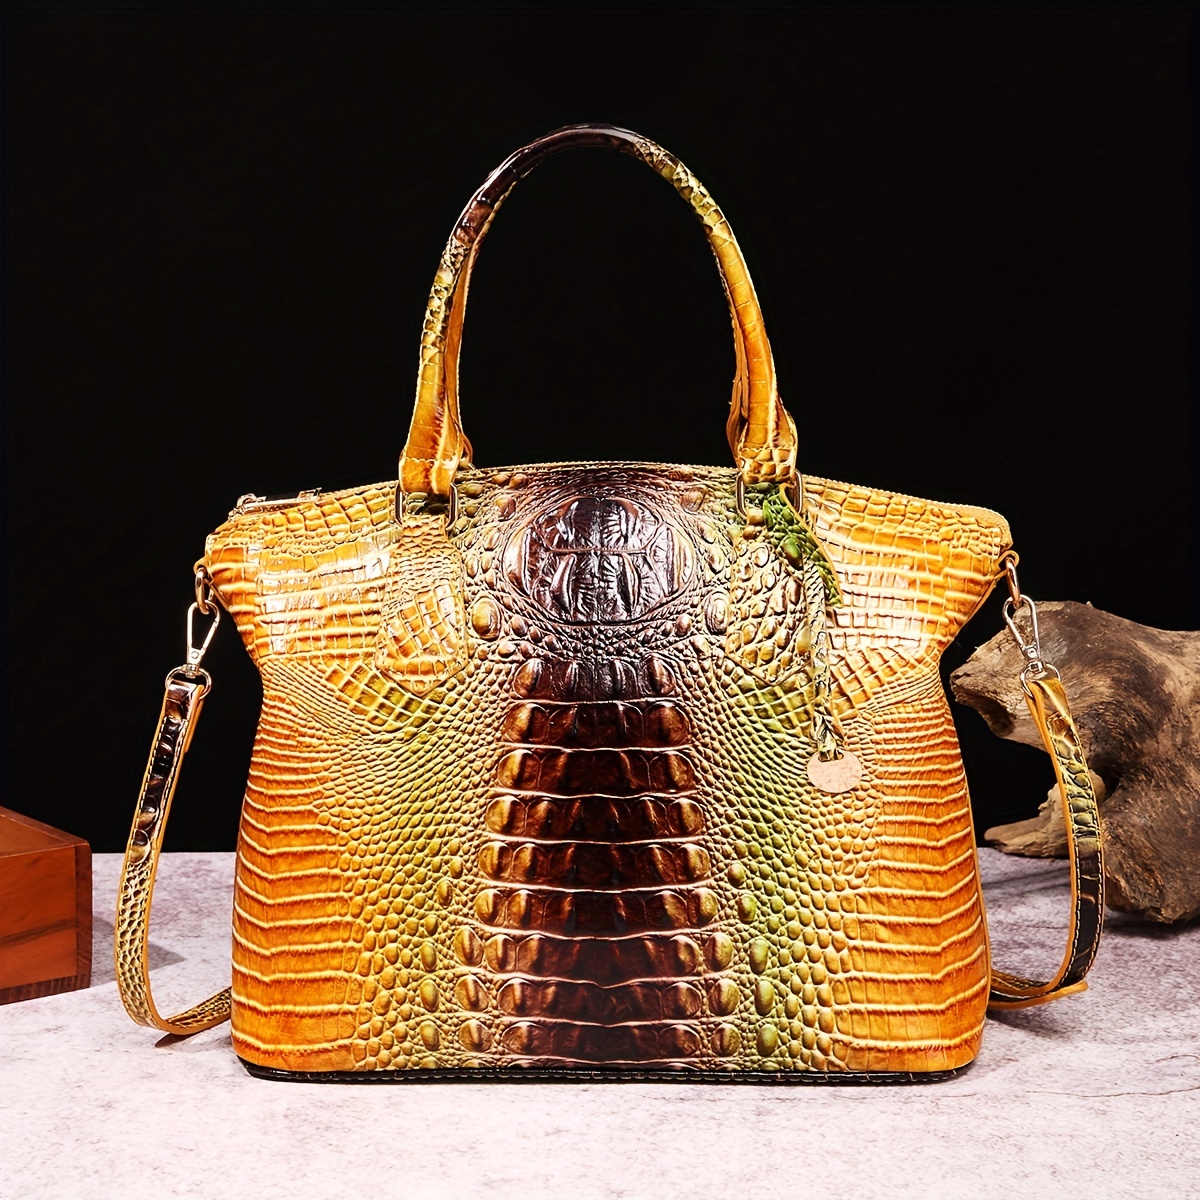  Satchel Bag Women's Vegan Leather Crocodile-Embossed Pattern  With Top Handle Large Shoulder Bags Tote Handbags (Black) : Clothing, Shoes  & Jewelry